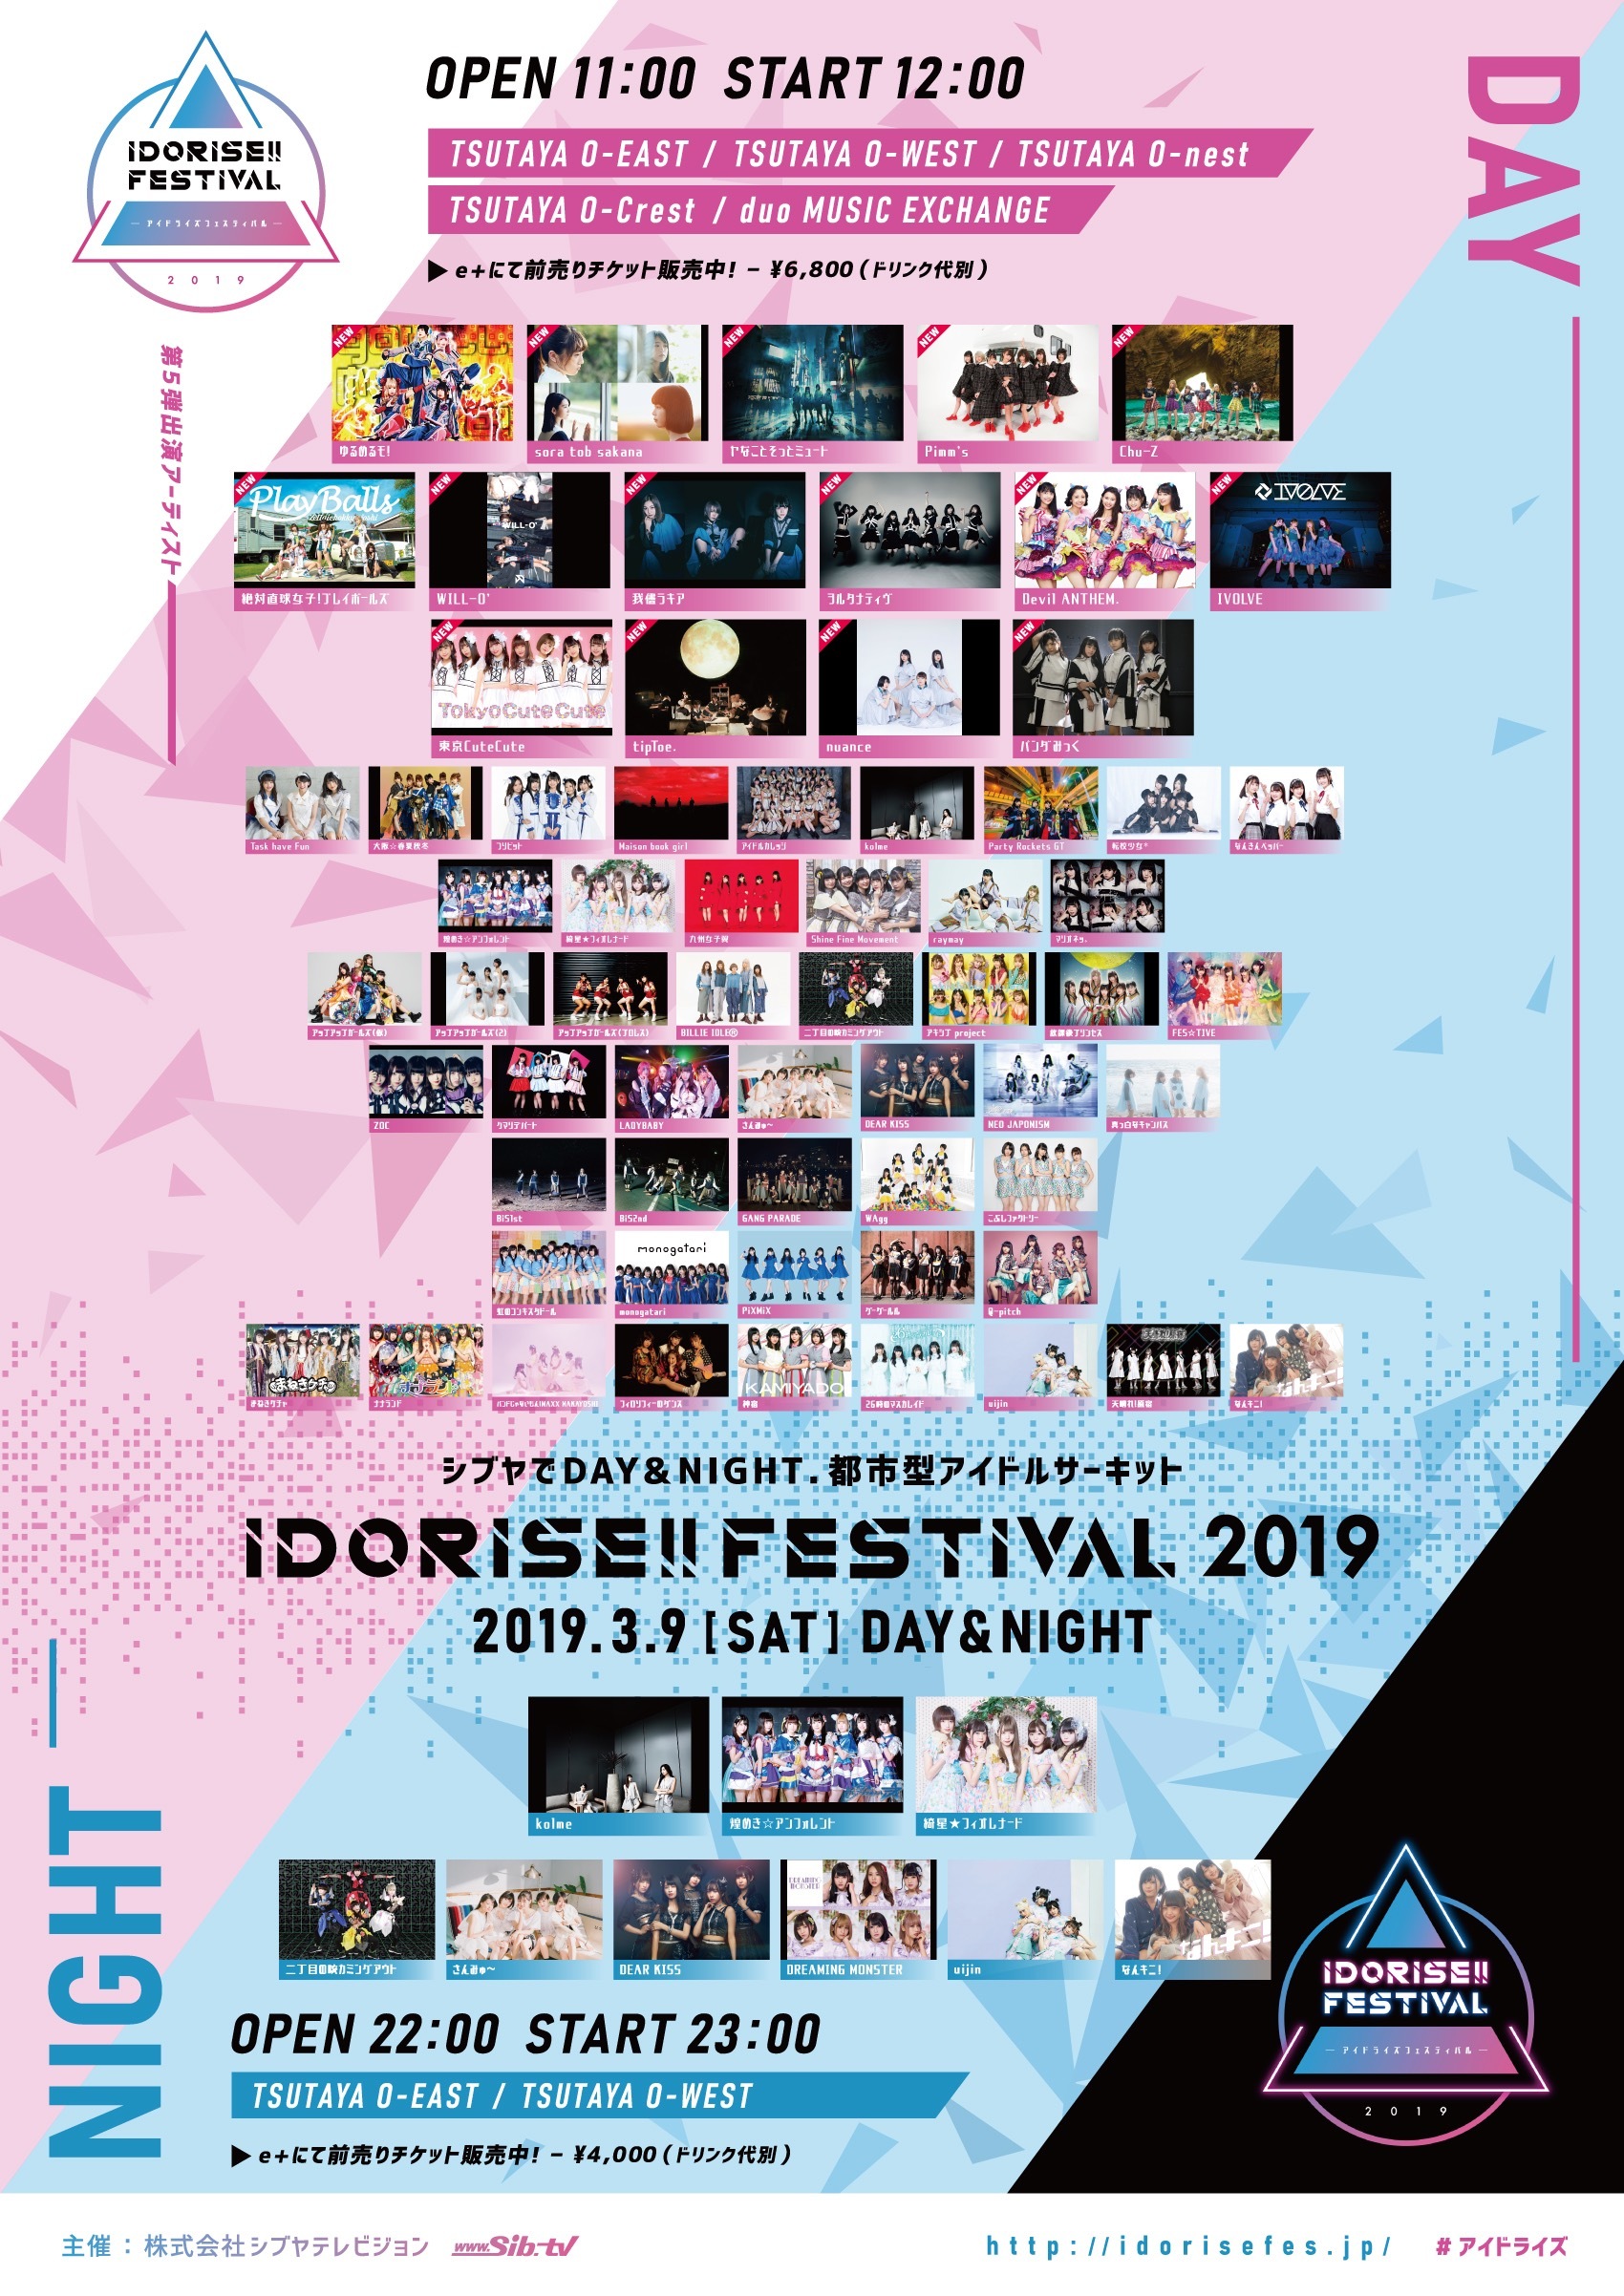 IDORISE!! FESTIVAL 2019